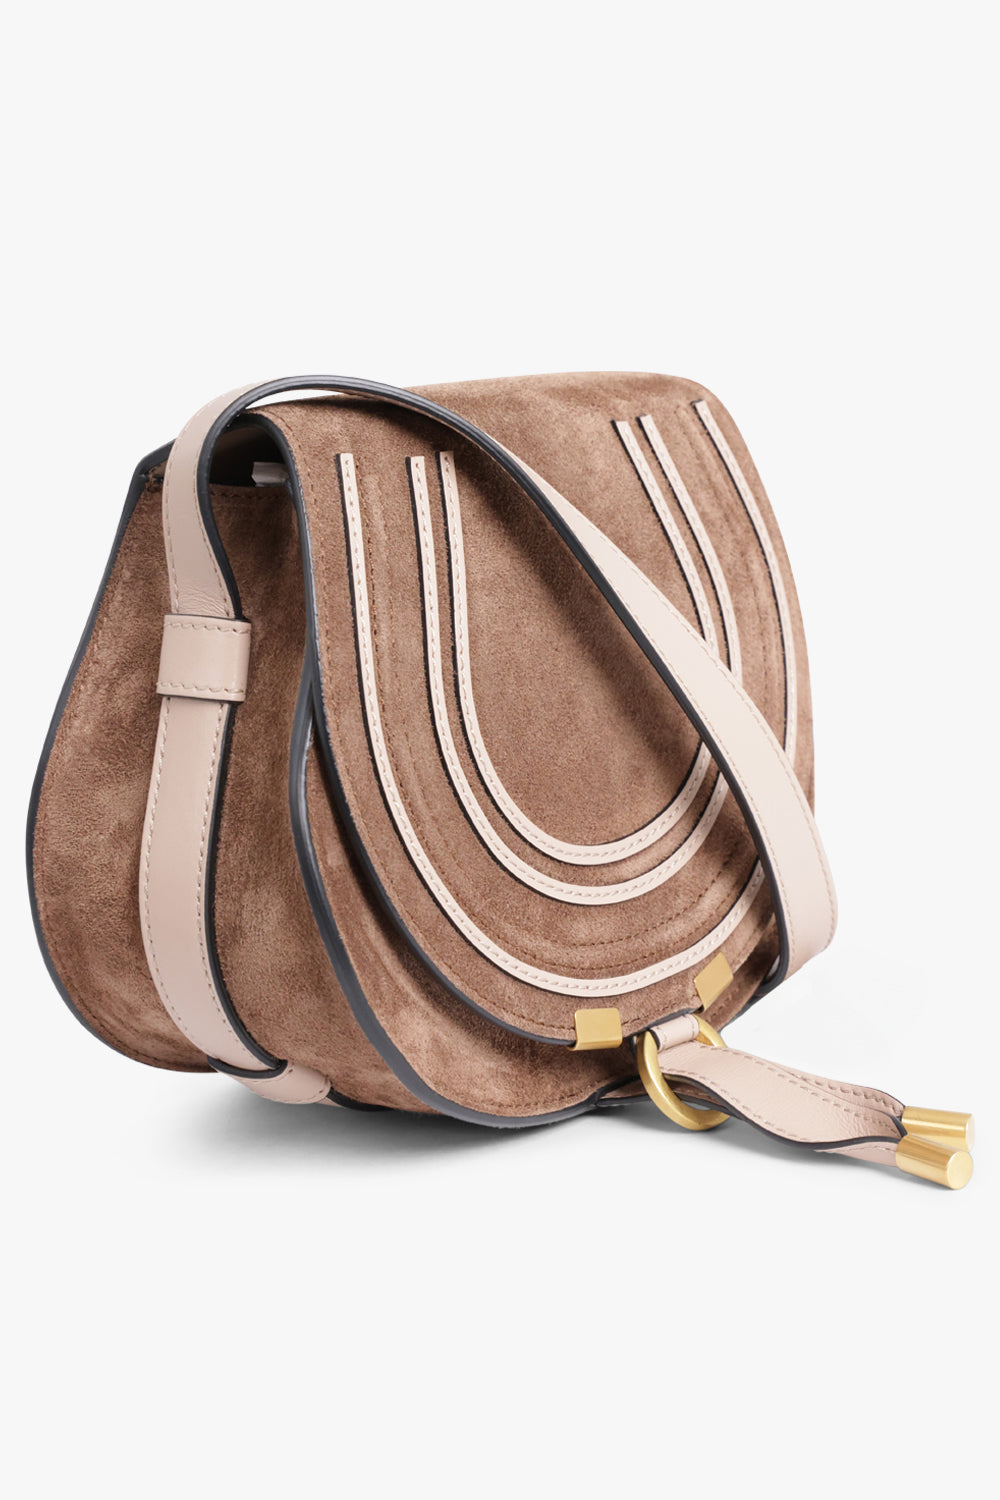 CHLOE BAGS BROWN Marcie Small Bag | Pure Brown